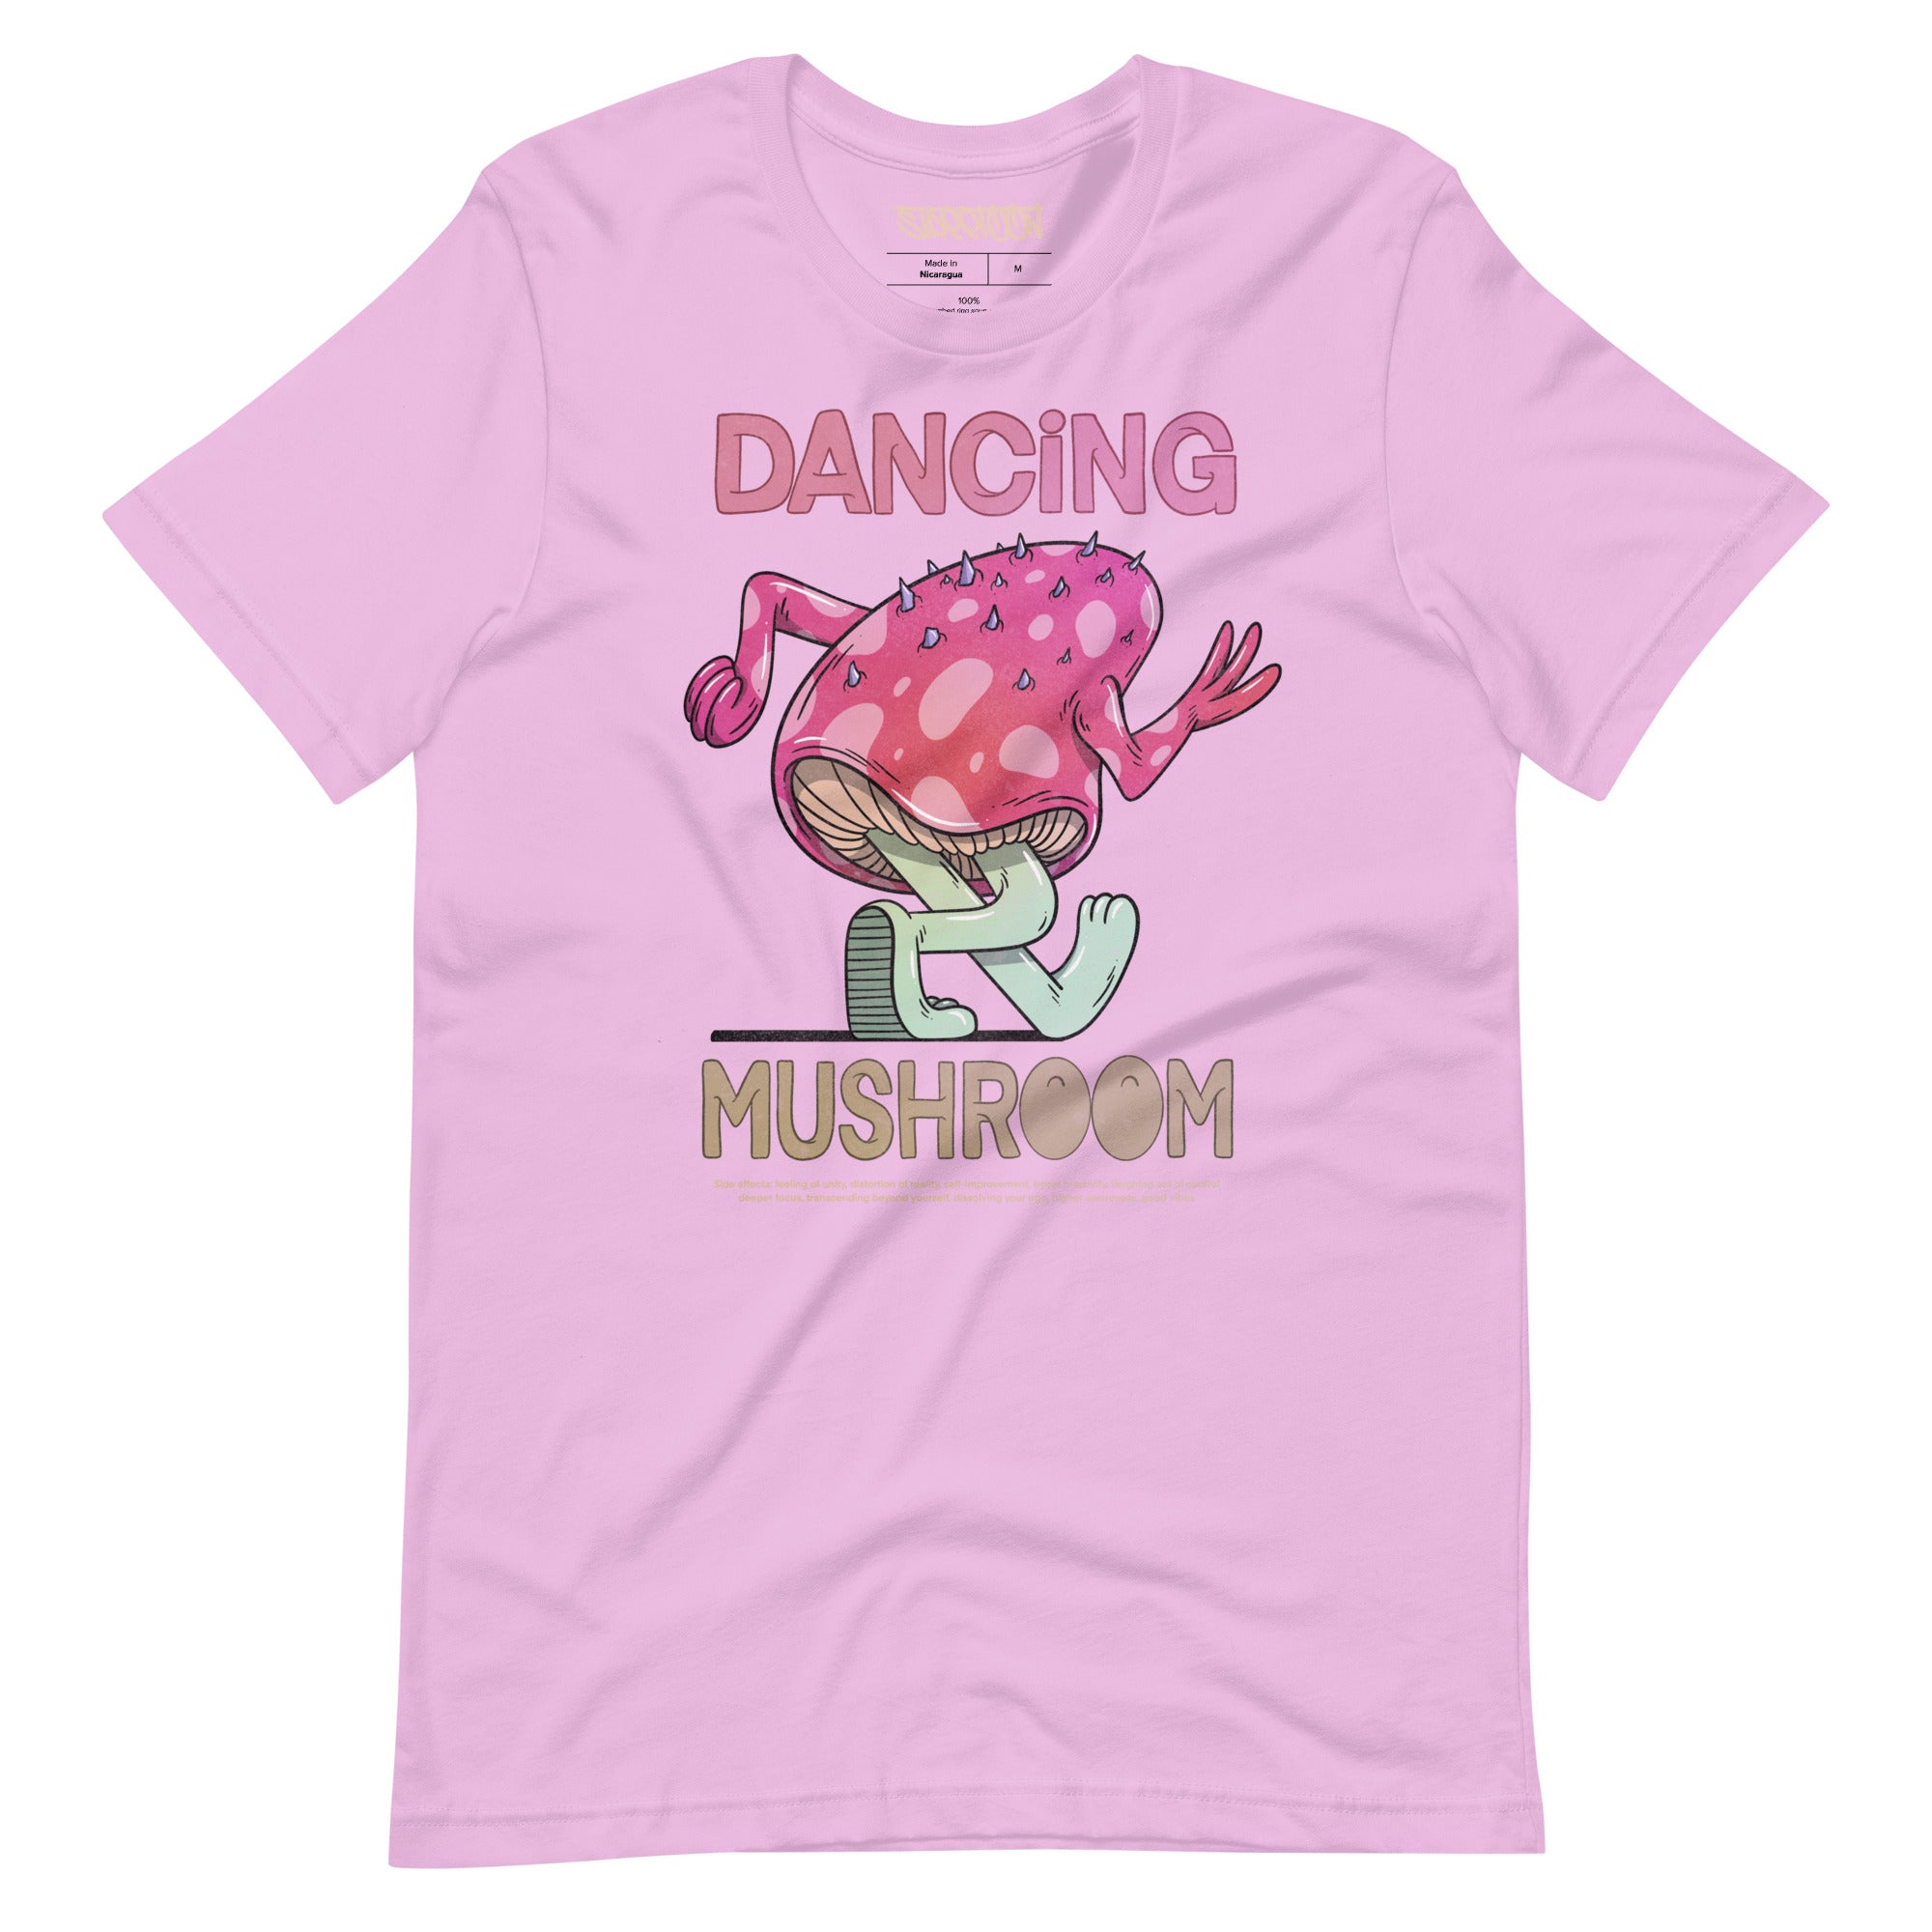 DANCING MUSHROOM T-SHIRT